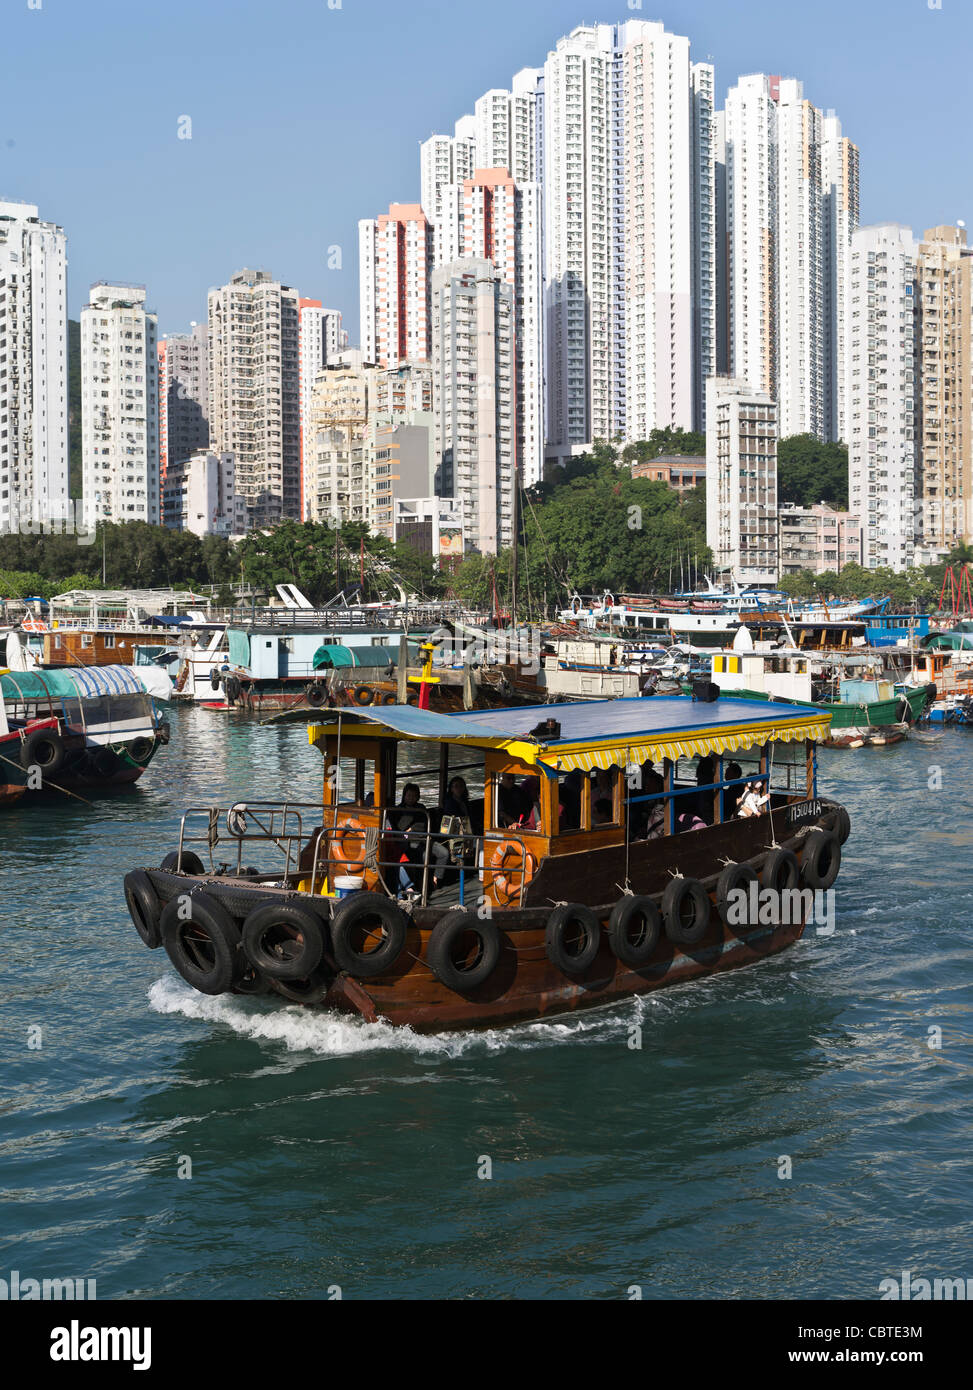 dh Aberdeen Harbour ABERDEEN HONG KONG AP Lei Chau ferry sampan aberdeen gratte-ciel tour résidentielle blocs hk chine port junks Banque D'Images